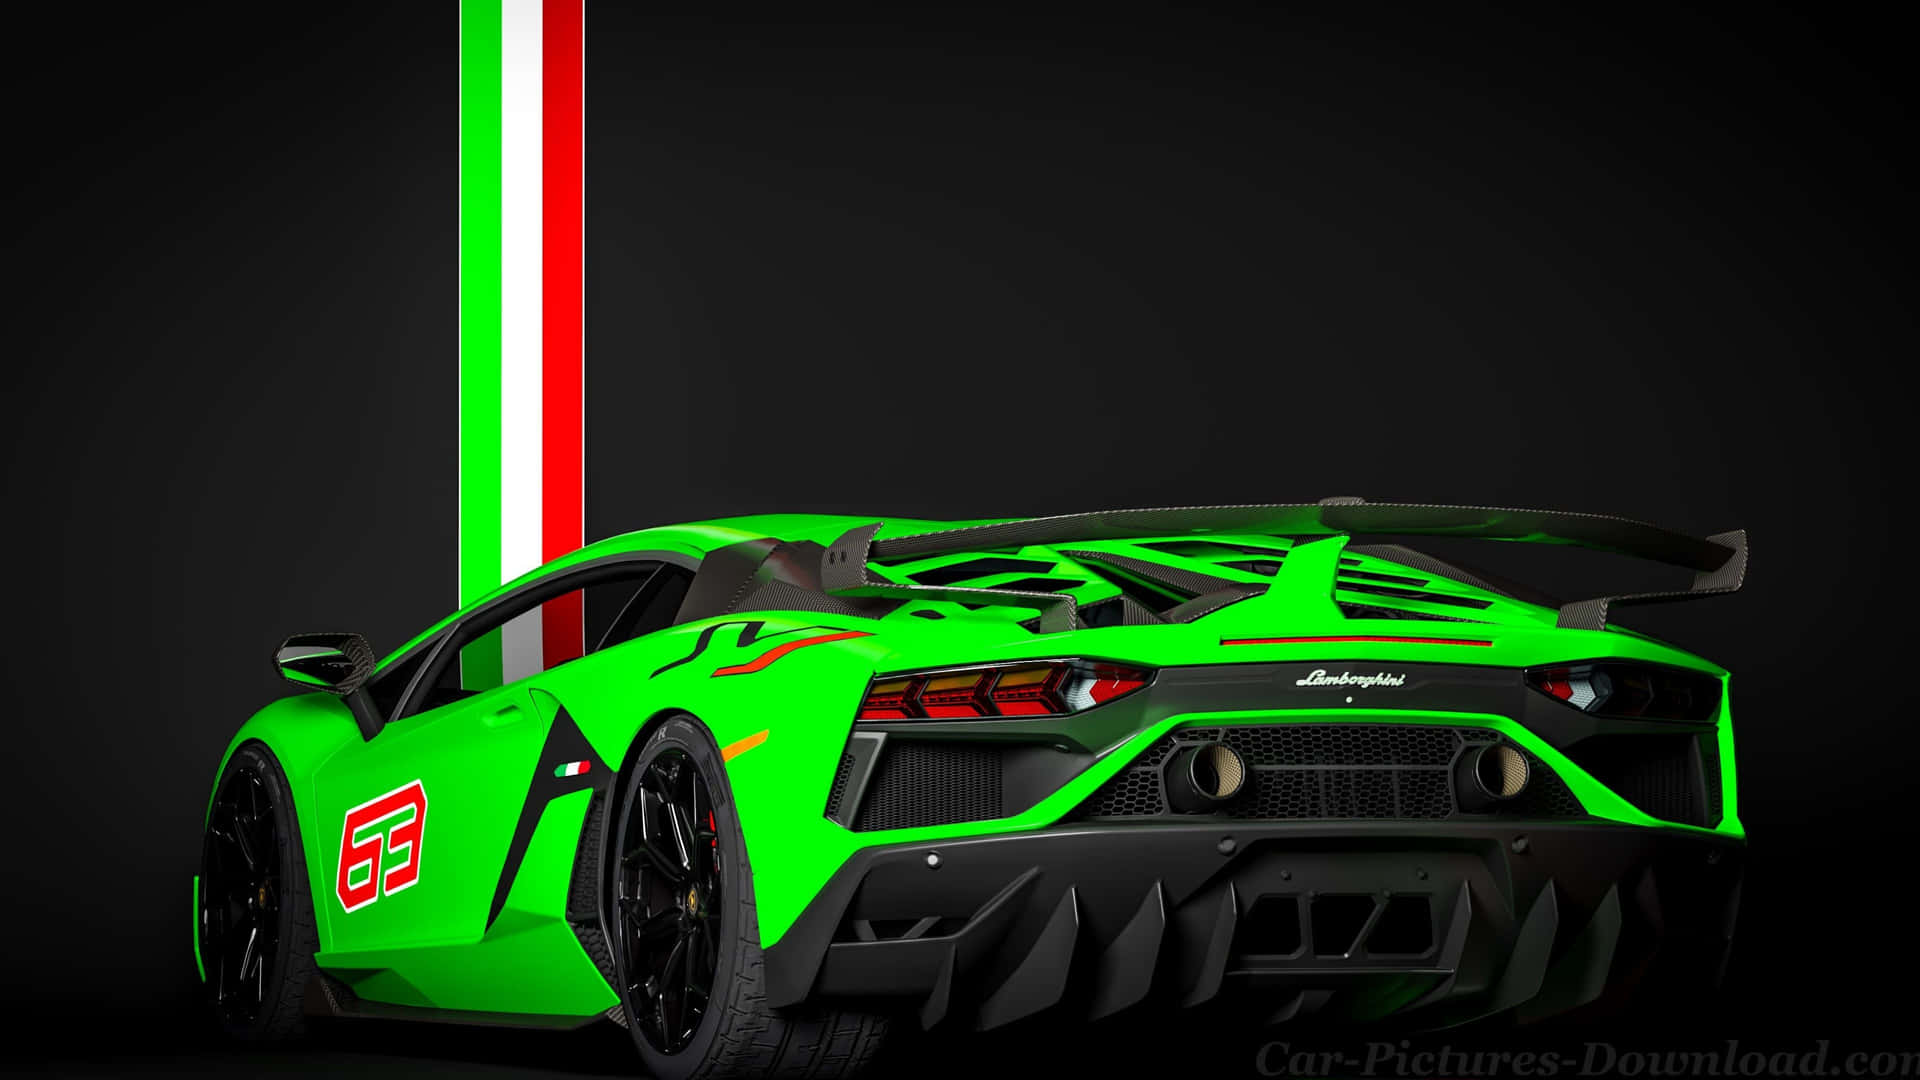 Stunning 4k Lamborghini Wallpaper For A High-resolution Visual Experience